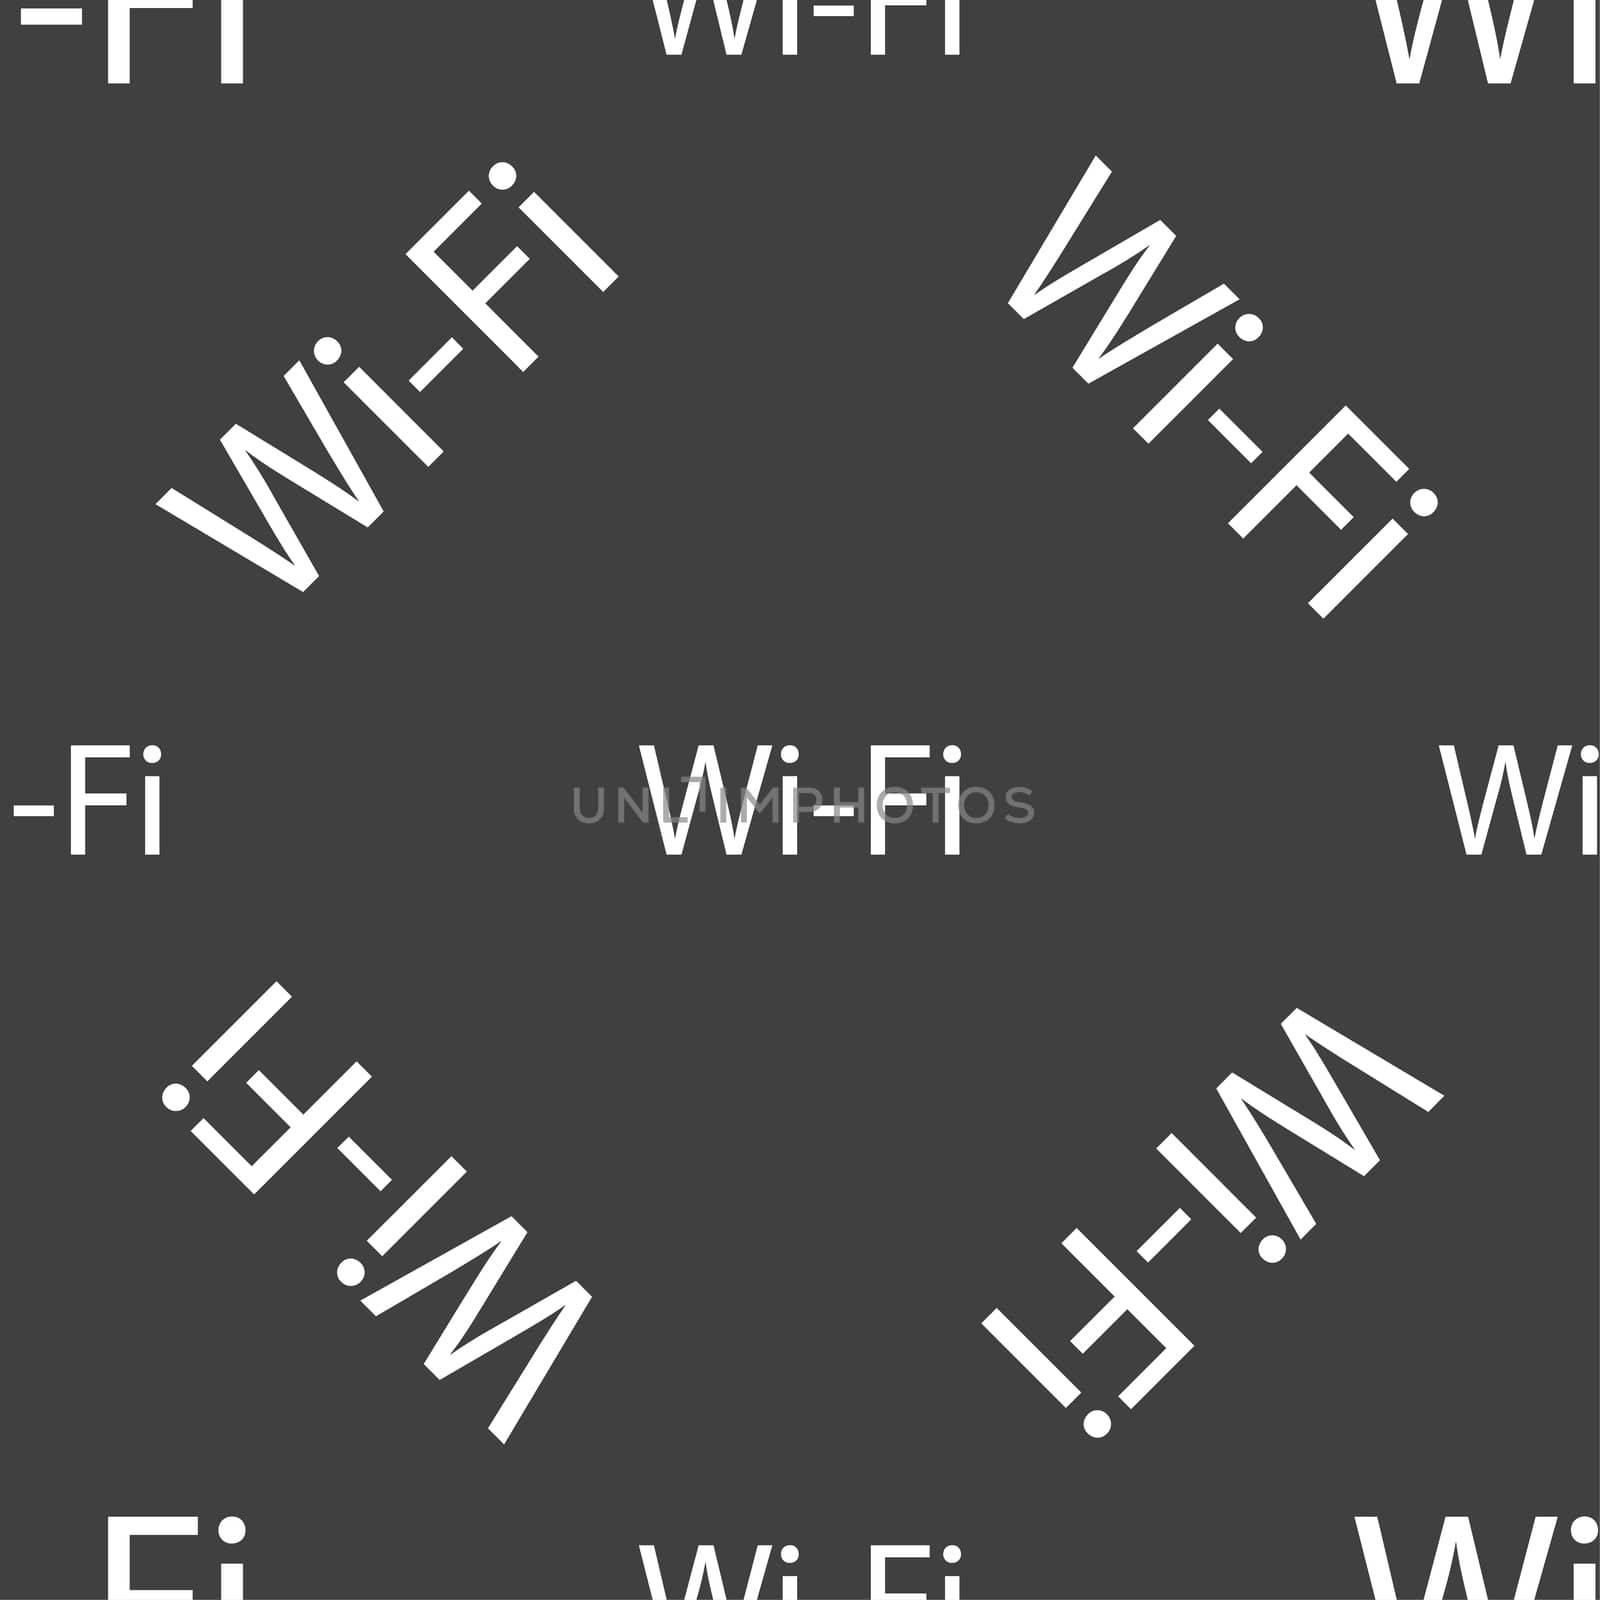 Free wifi sign. Wi-fi symbol. Wireless Network icon. Seamless pattern on a gray background.  by serhii_lohvyniuk